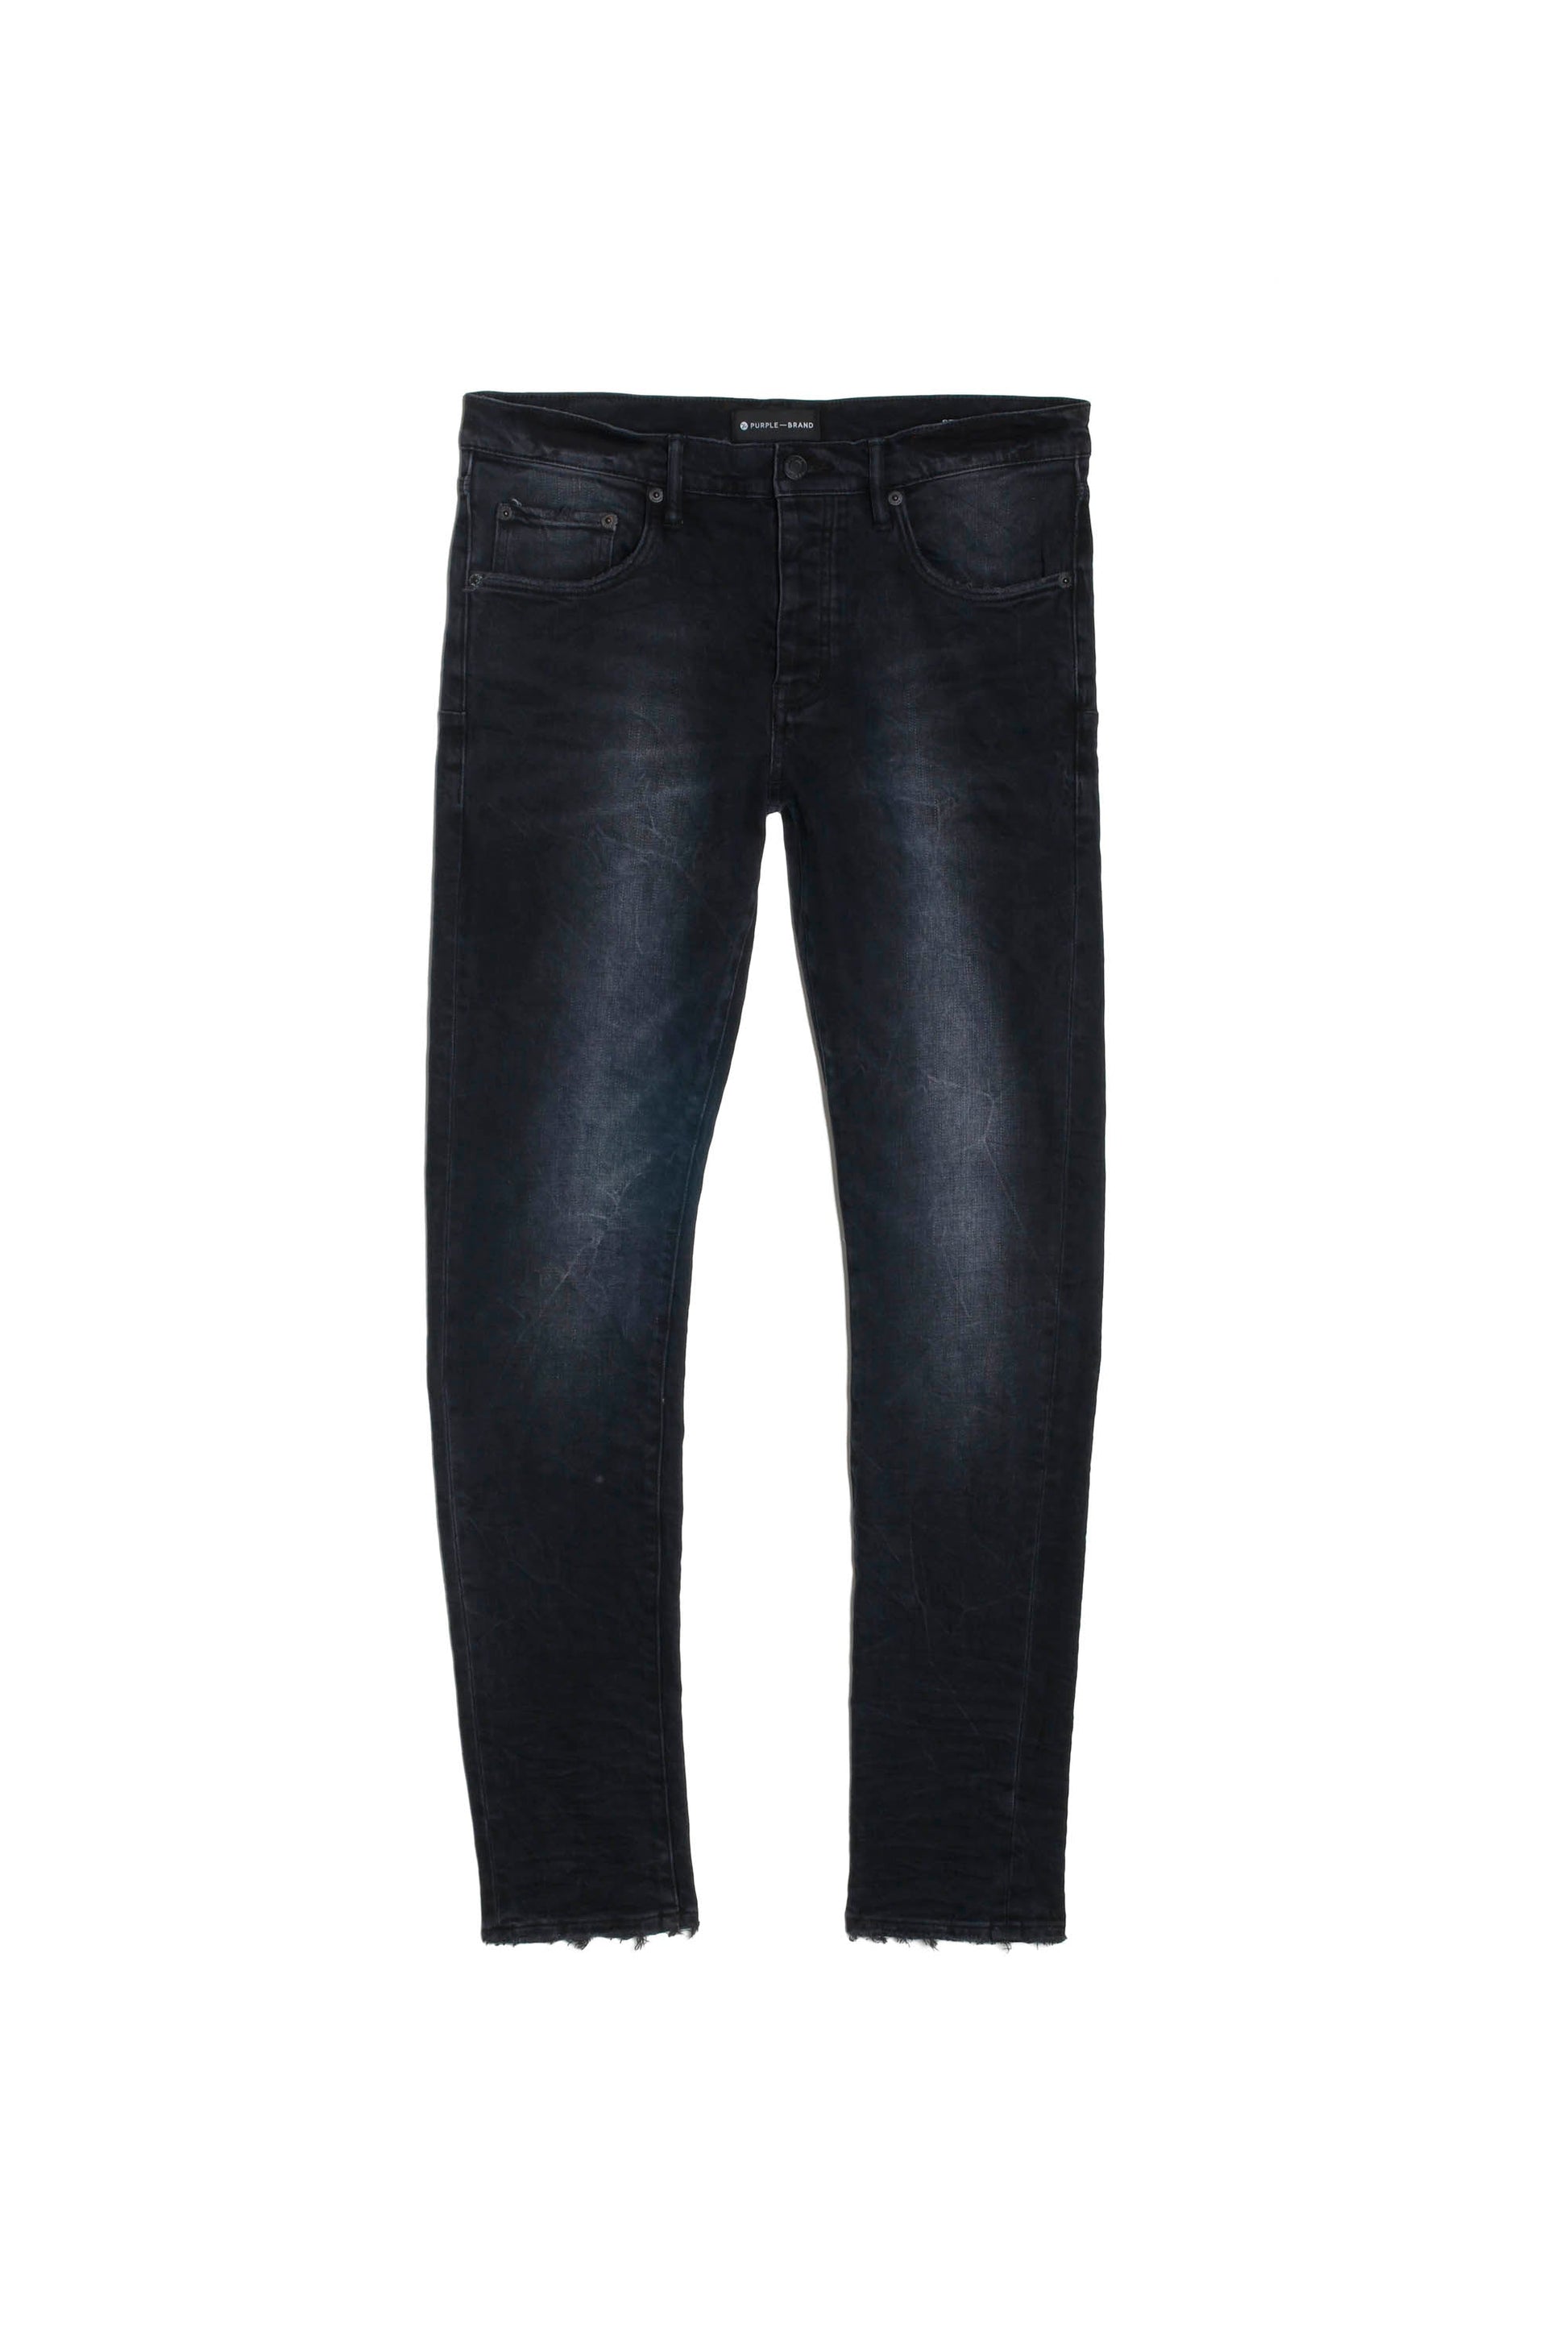 mens purple brand denim jean low rise skinny style no. p001 black wash front